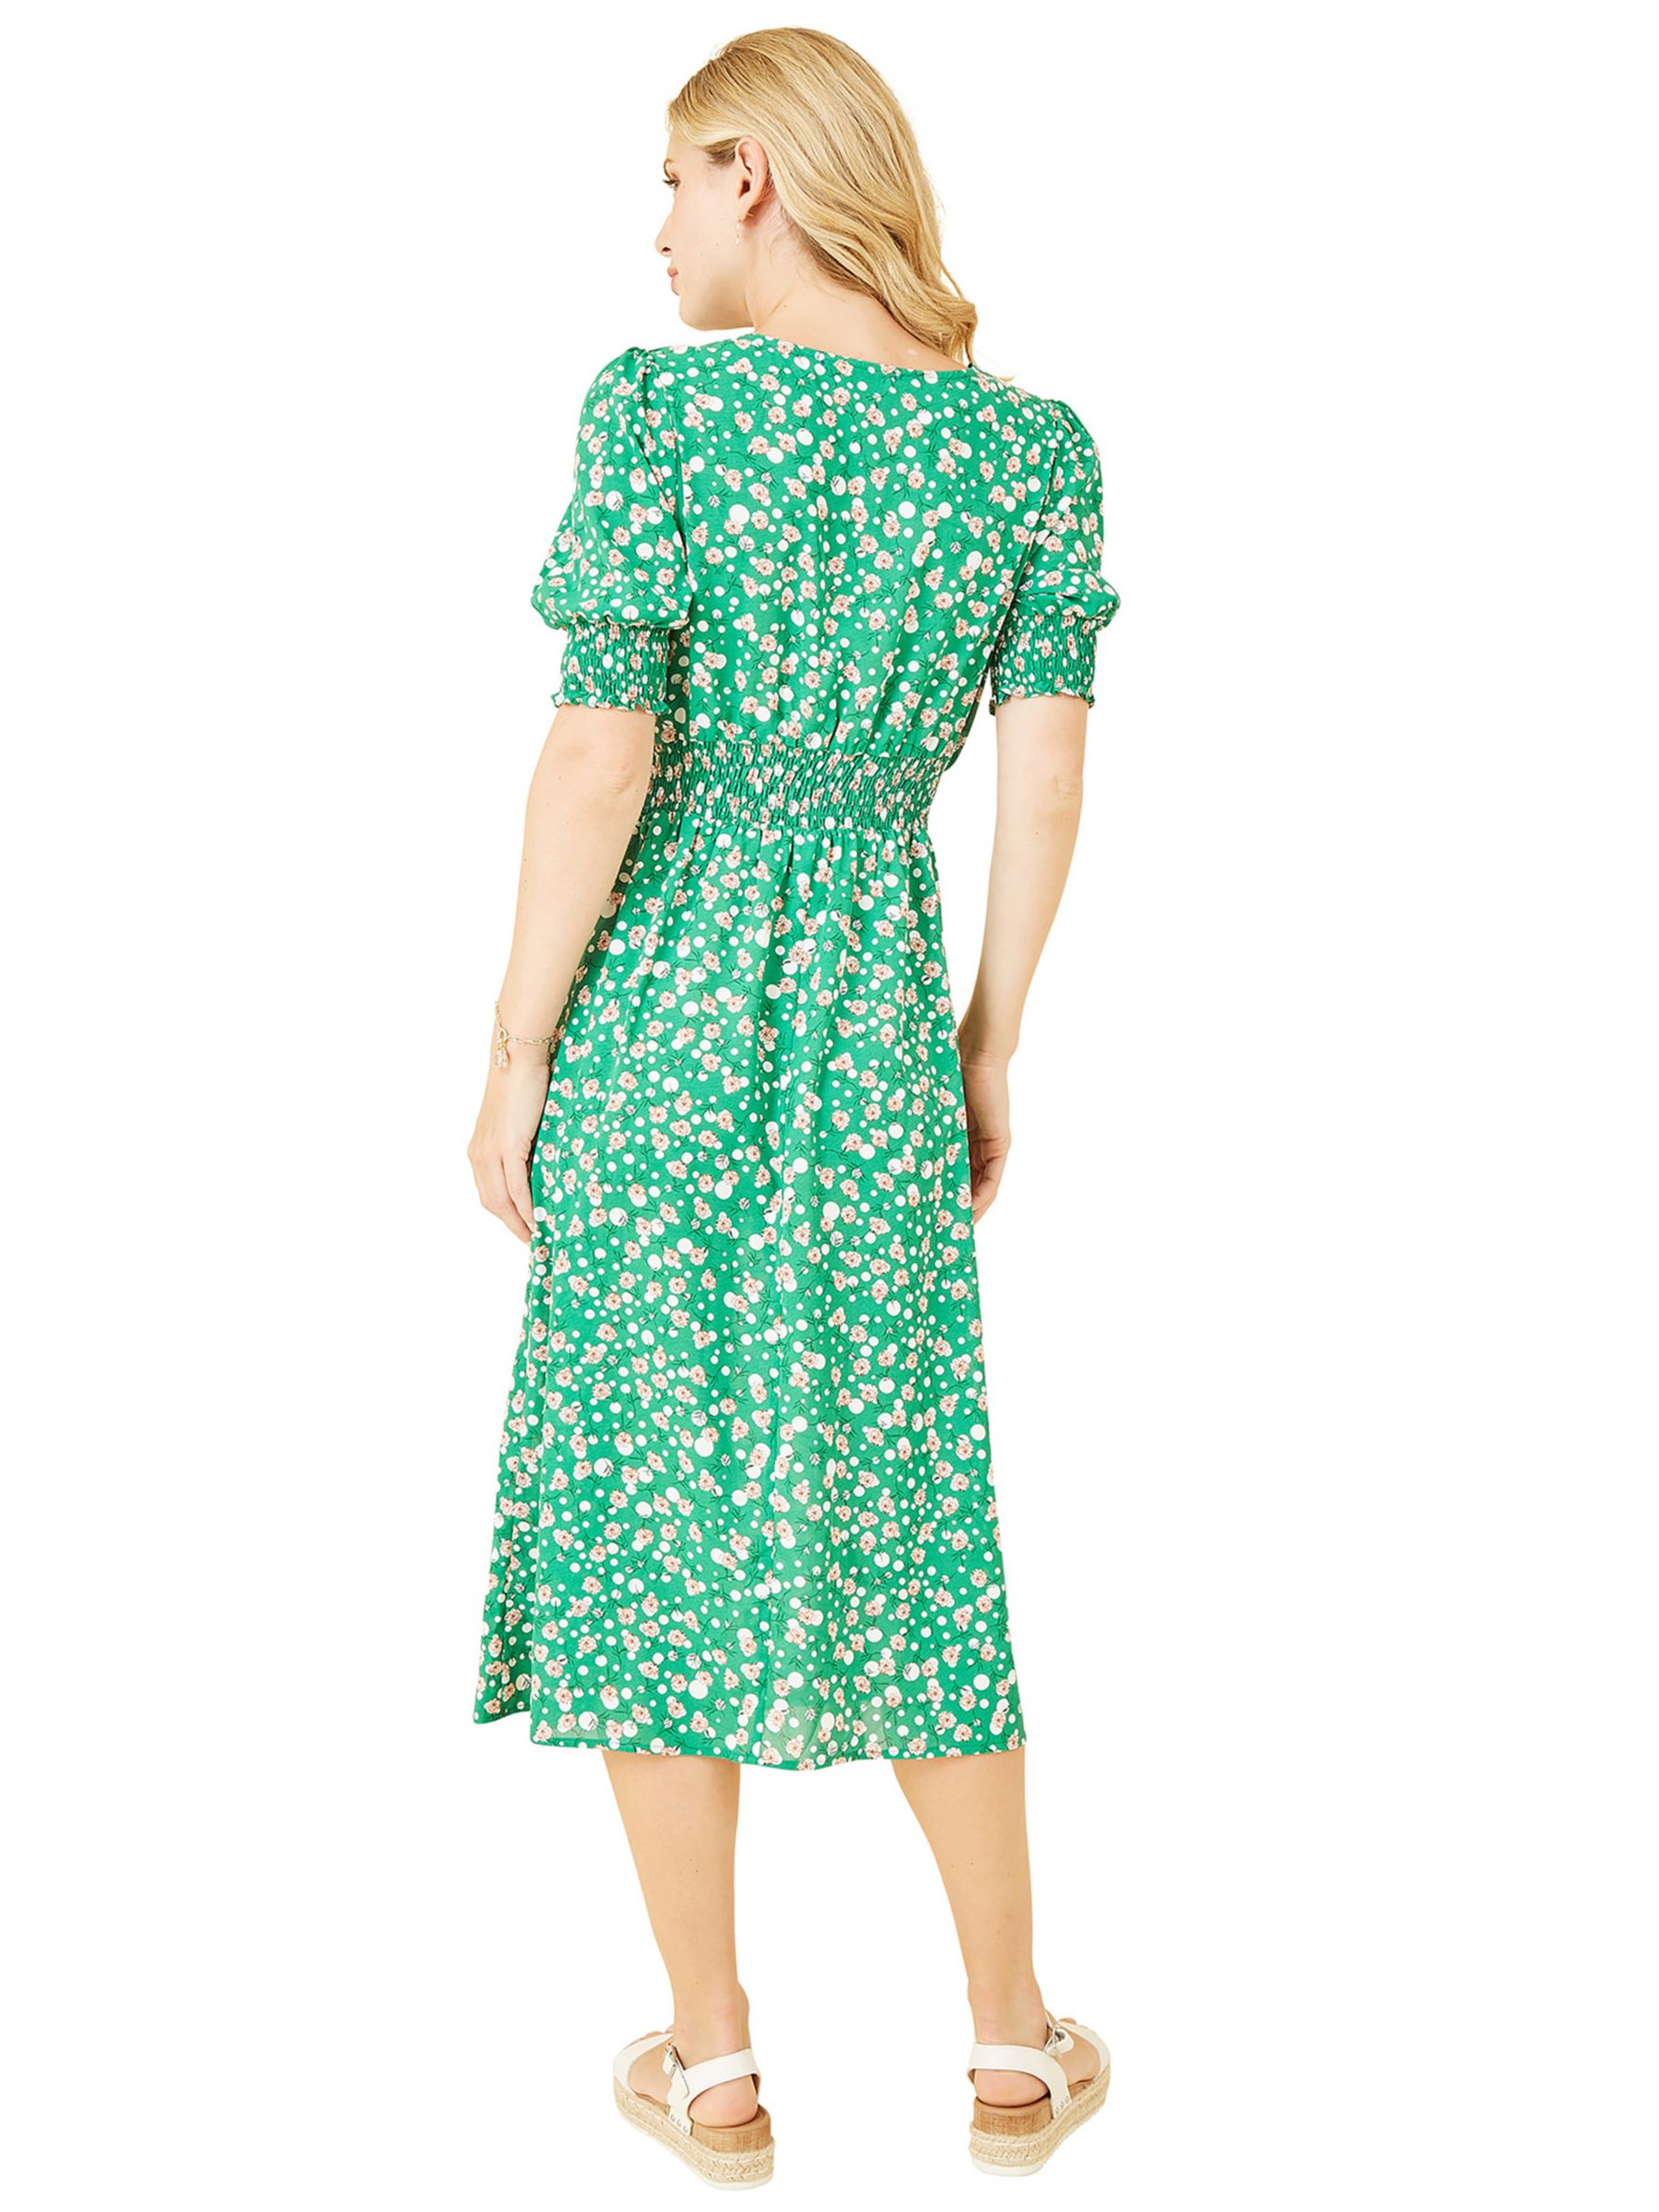 Yumi Mela London Floral Print Ruched Midi Dress, Green, 8